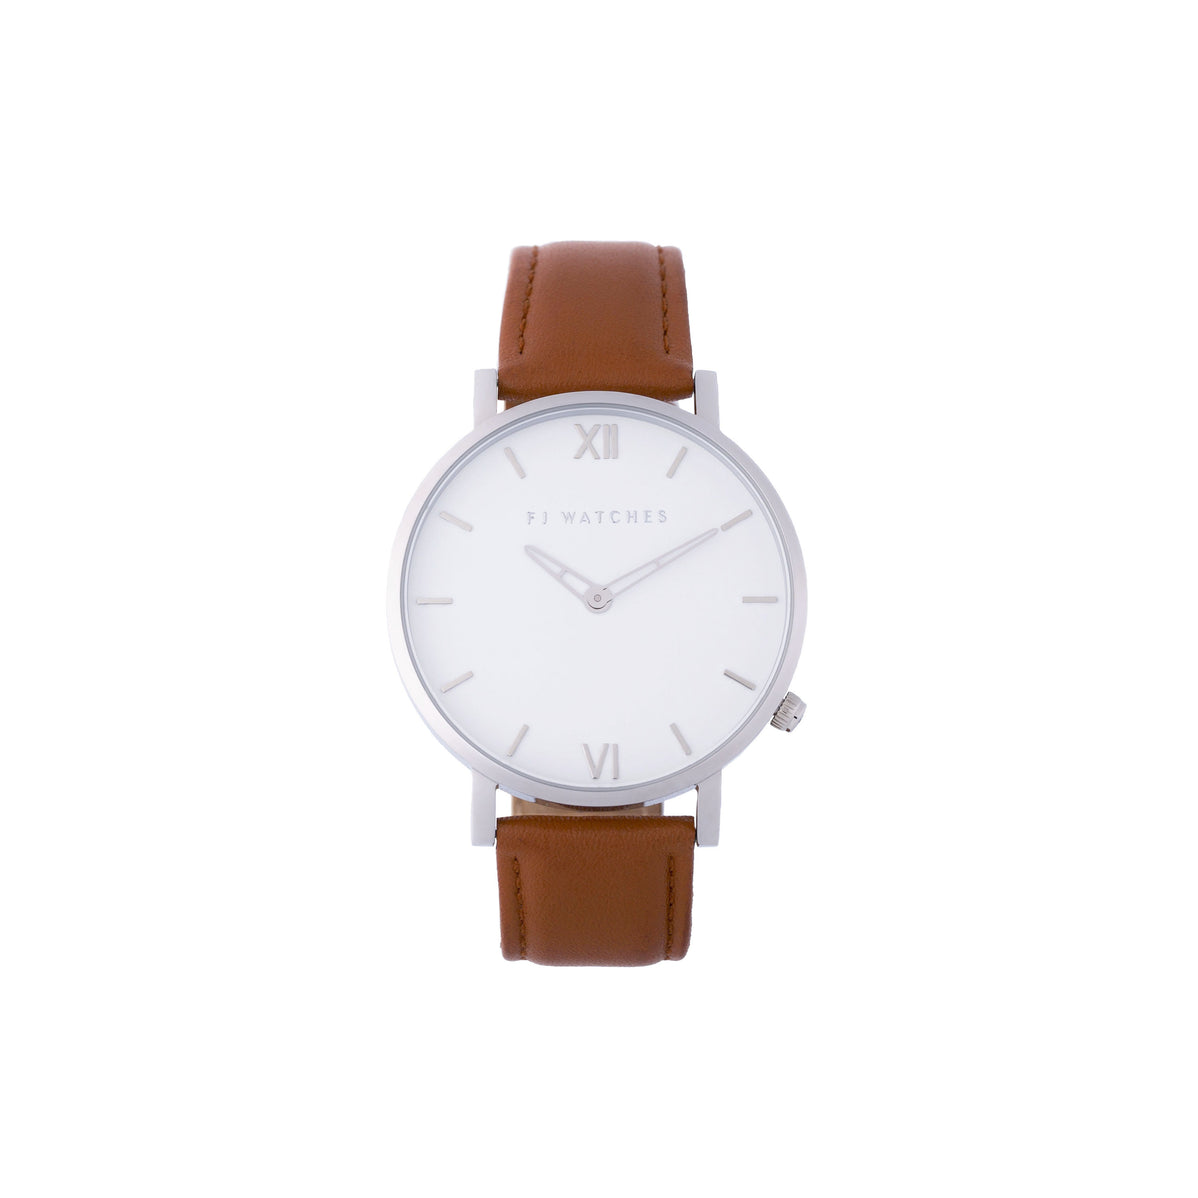 FJ Watches silver sun white women 36mm tan light brown leather strap watch minimalist